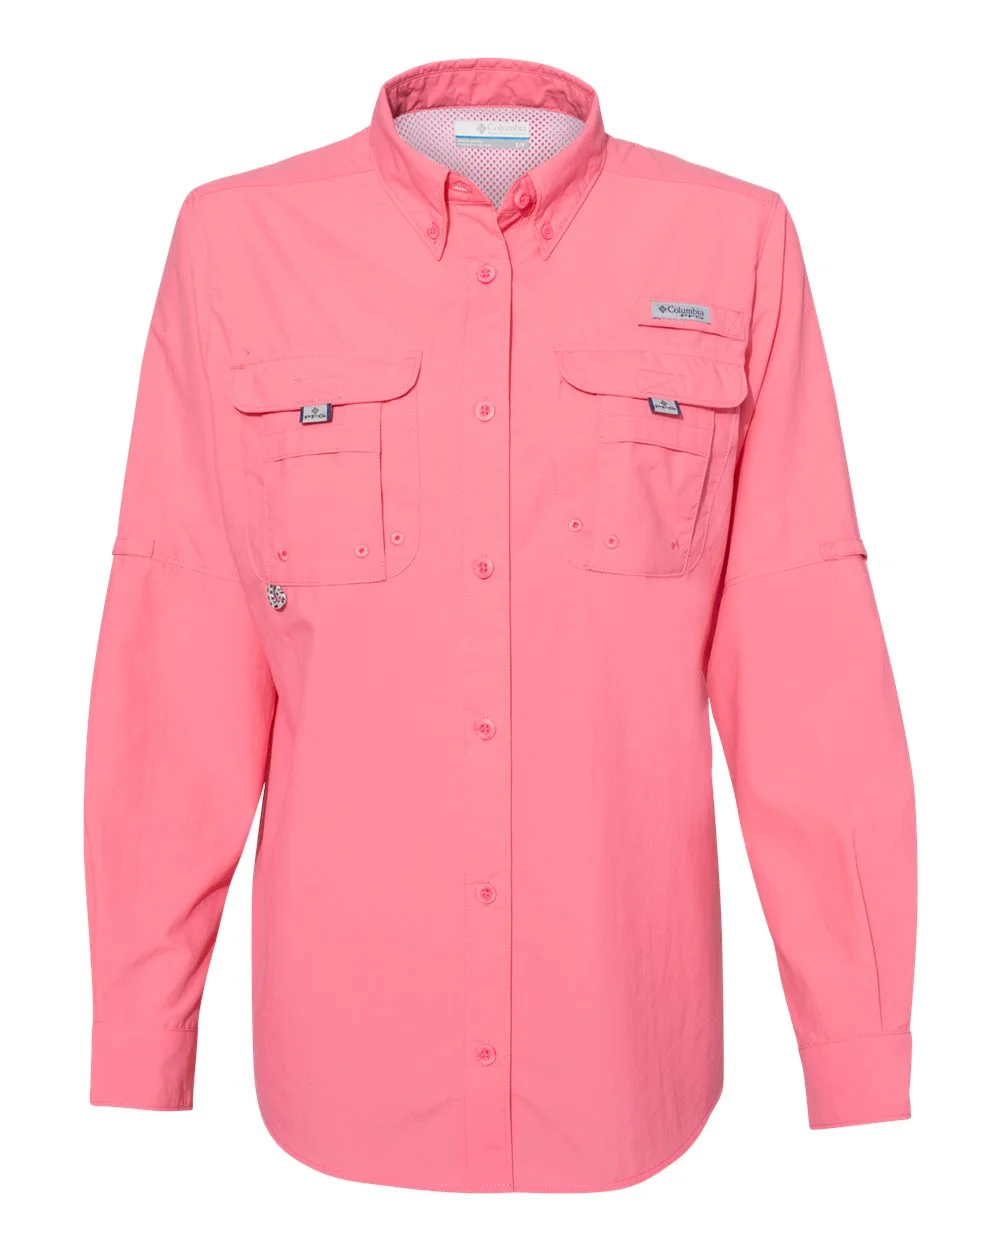 Custom Fishing Shirts - Short Sleeve, Long Sleeve & Women's